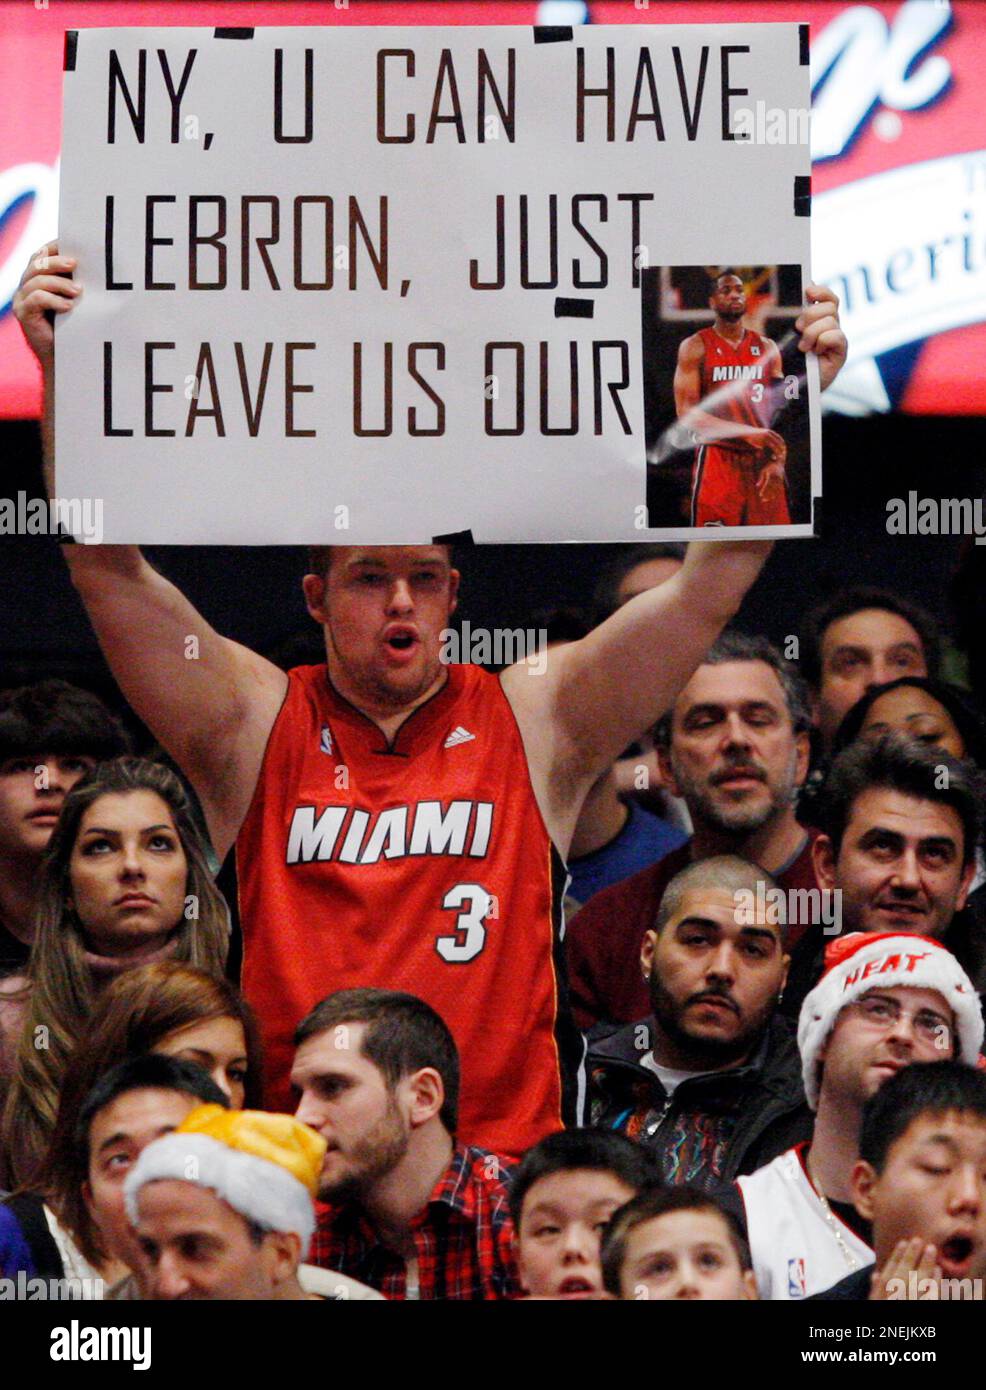 Dwyane Wade - Miami Heat - Game-Worn Jersey - NBA Christmas Day